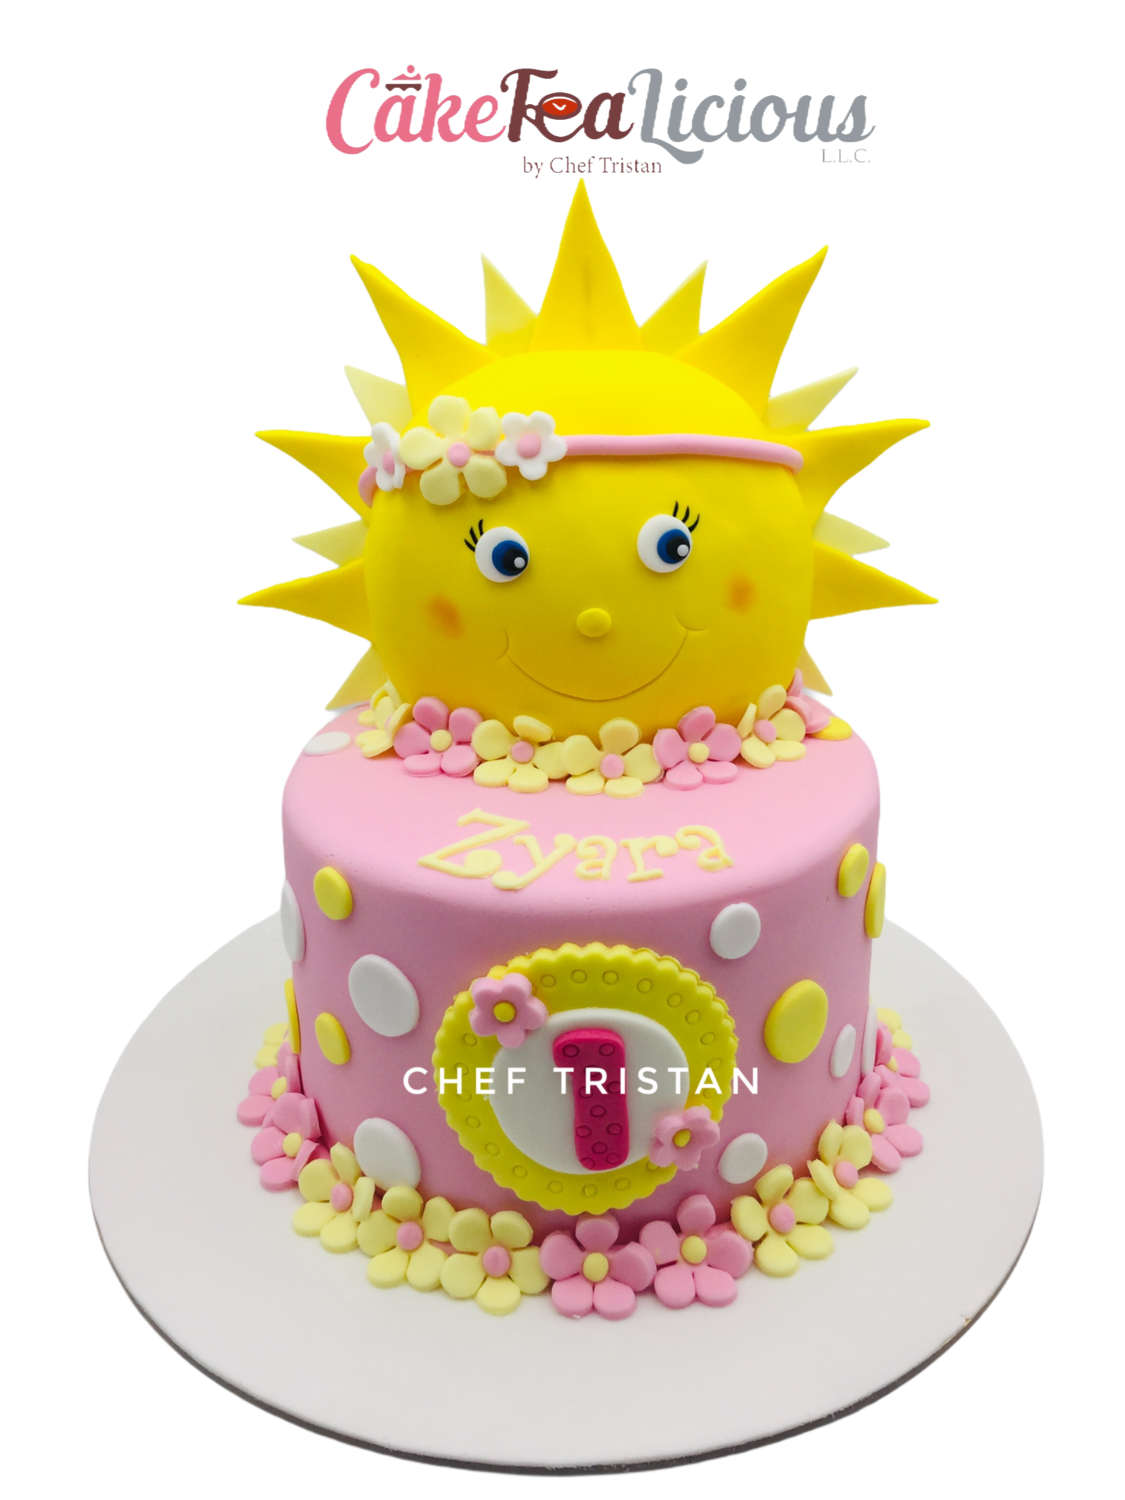 Sunshine Cake